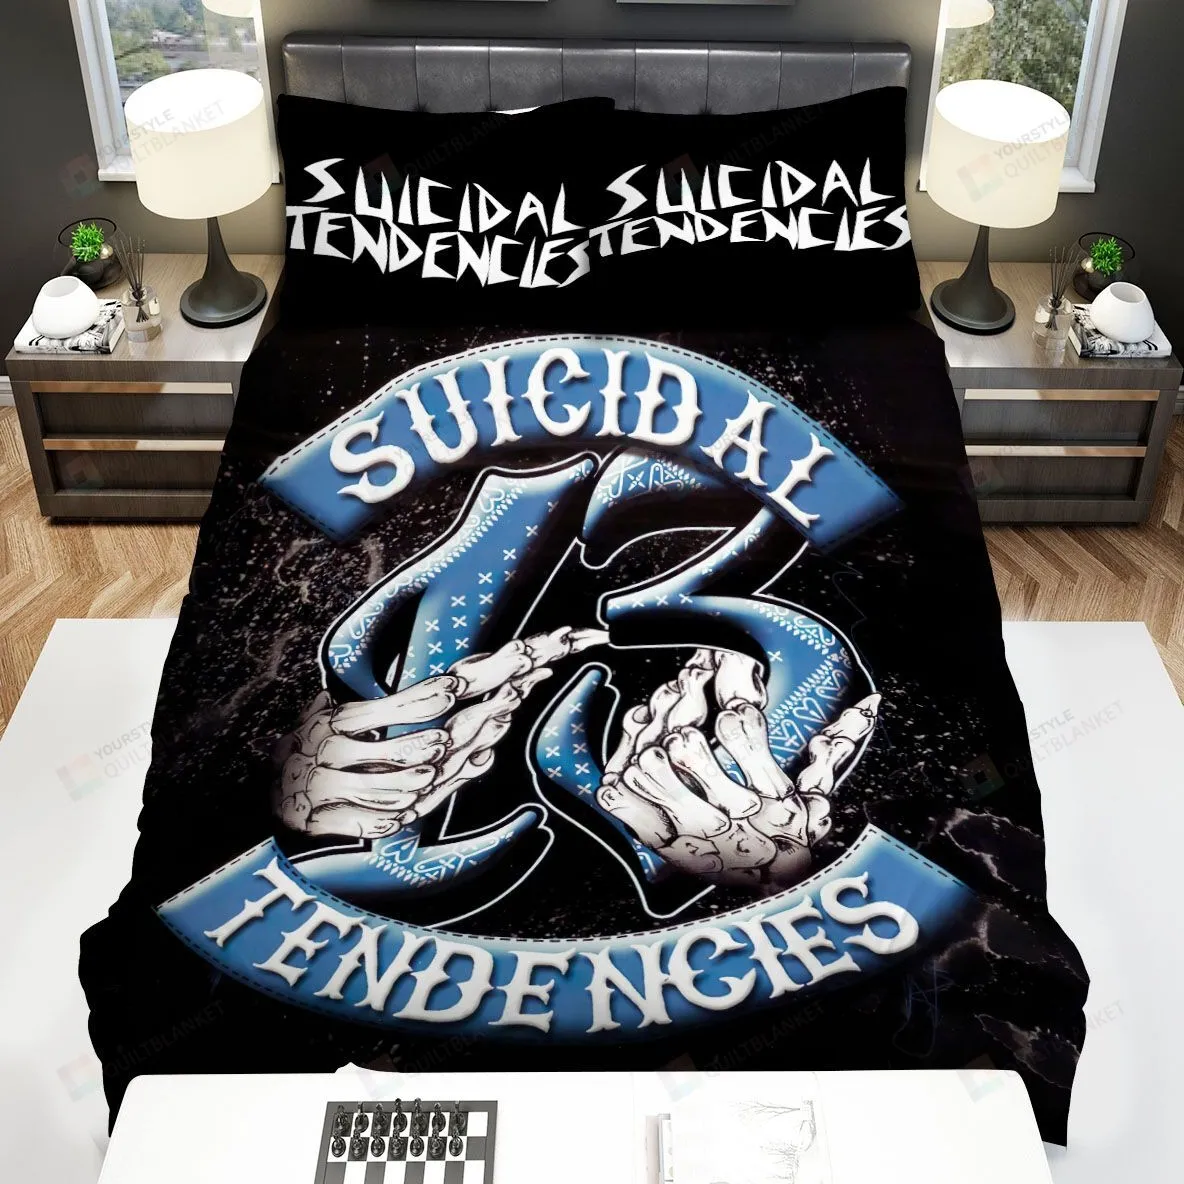 13 Interior Frontal Suicidal Tendencies Bed Sheets Spread Comforter Duvet Cover Bedding Sets